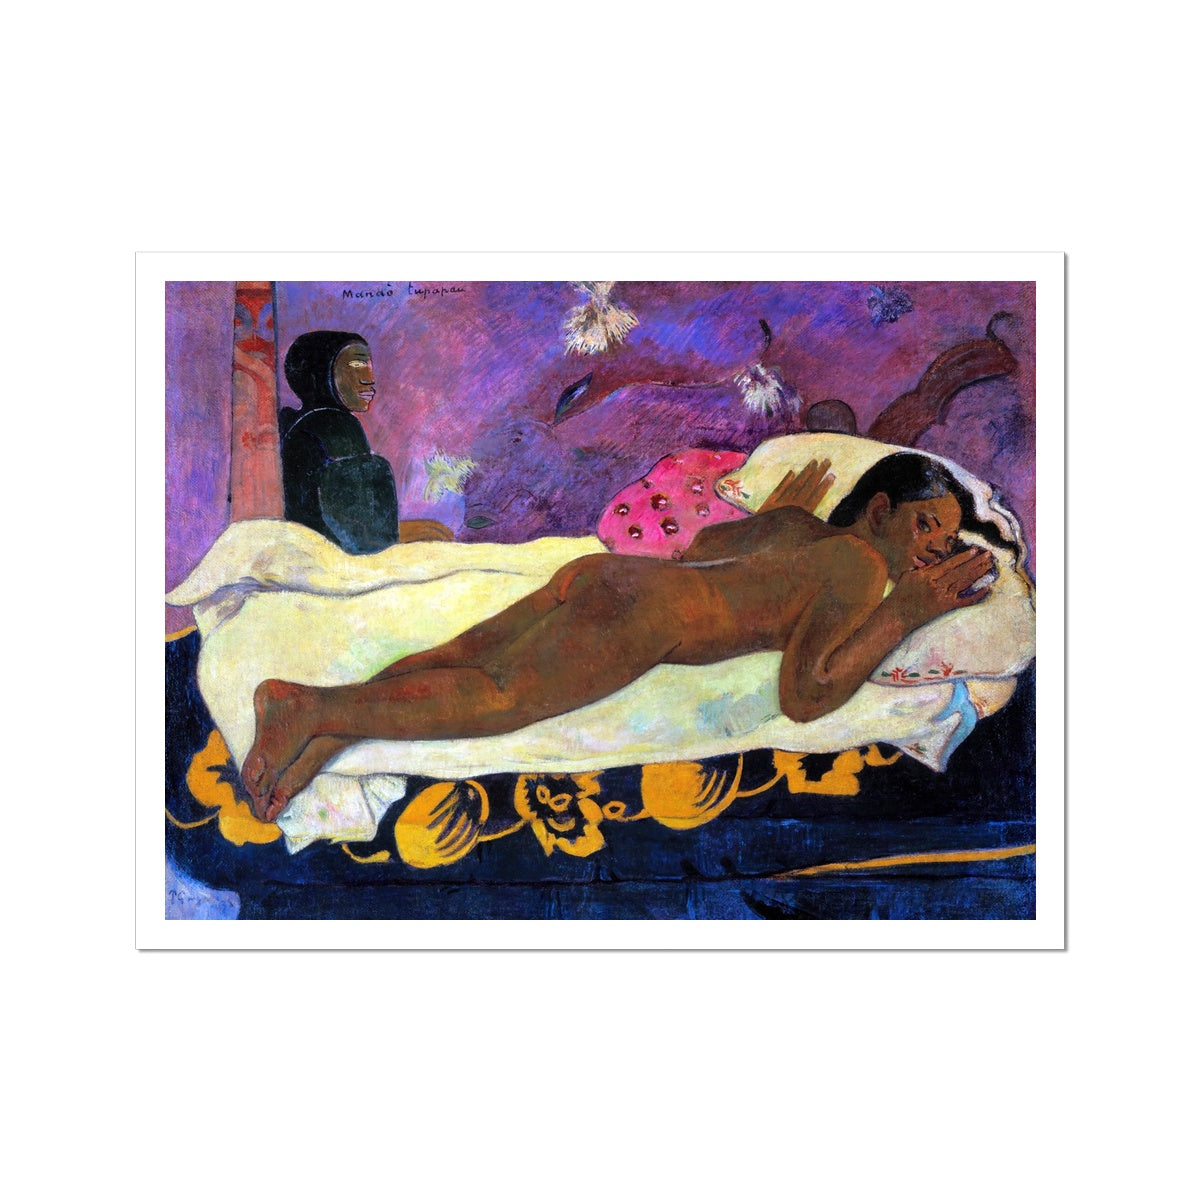 &#39;Manao Tupapau&#39;, Spirit of the Dead by Paul Gauguin. Open Edition Fine Art Print. Art Gallery Historic Art